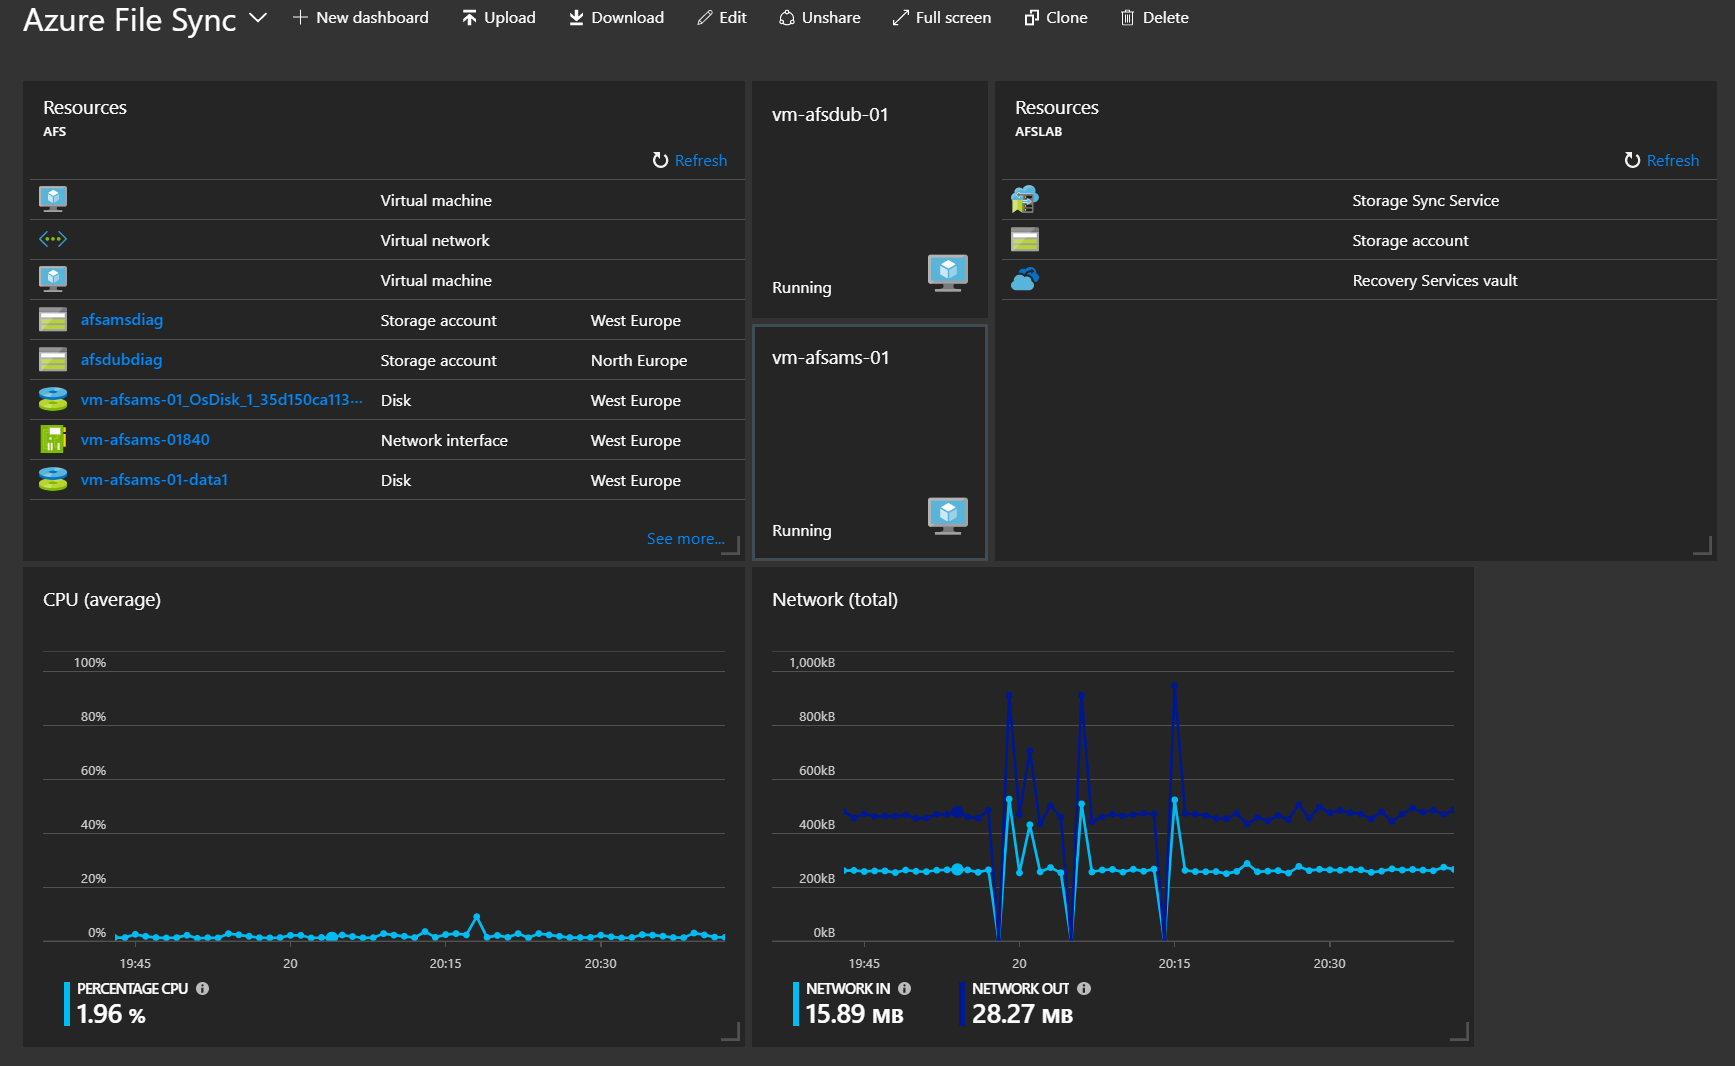 A custom Azure dashboard for my Azure File Sync lab [Image Credit: Aidan Finn]